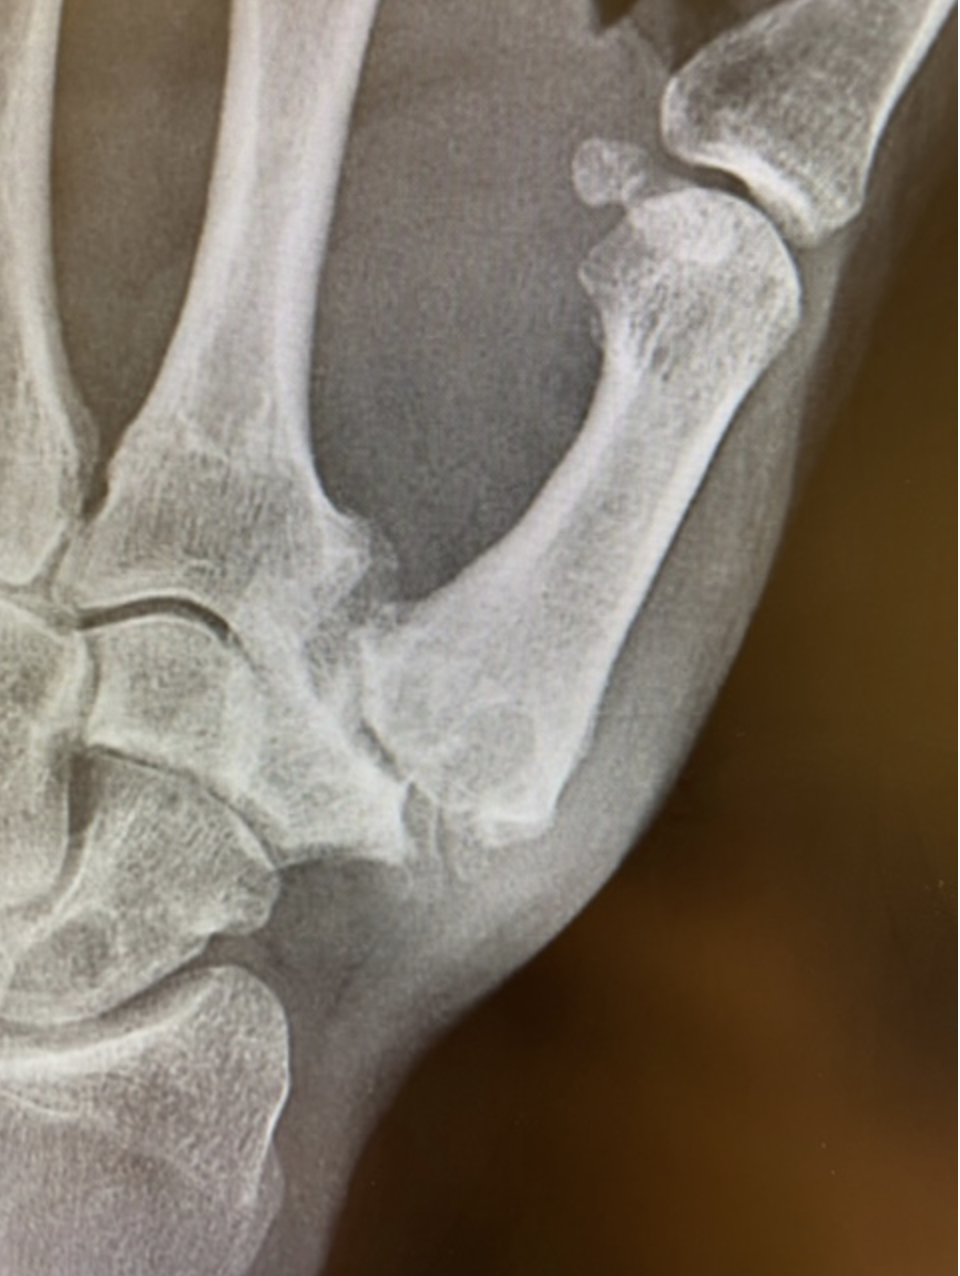 Thumb Arthritis Treatment Raleigh Hand Surgeon 